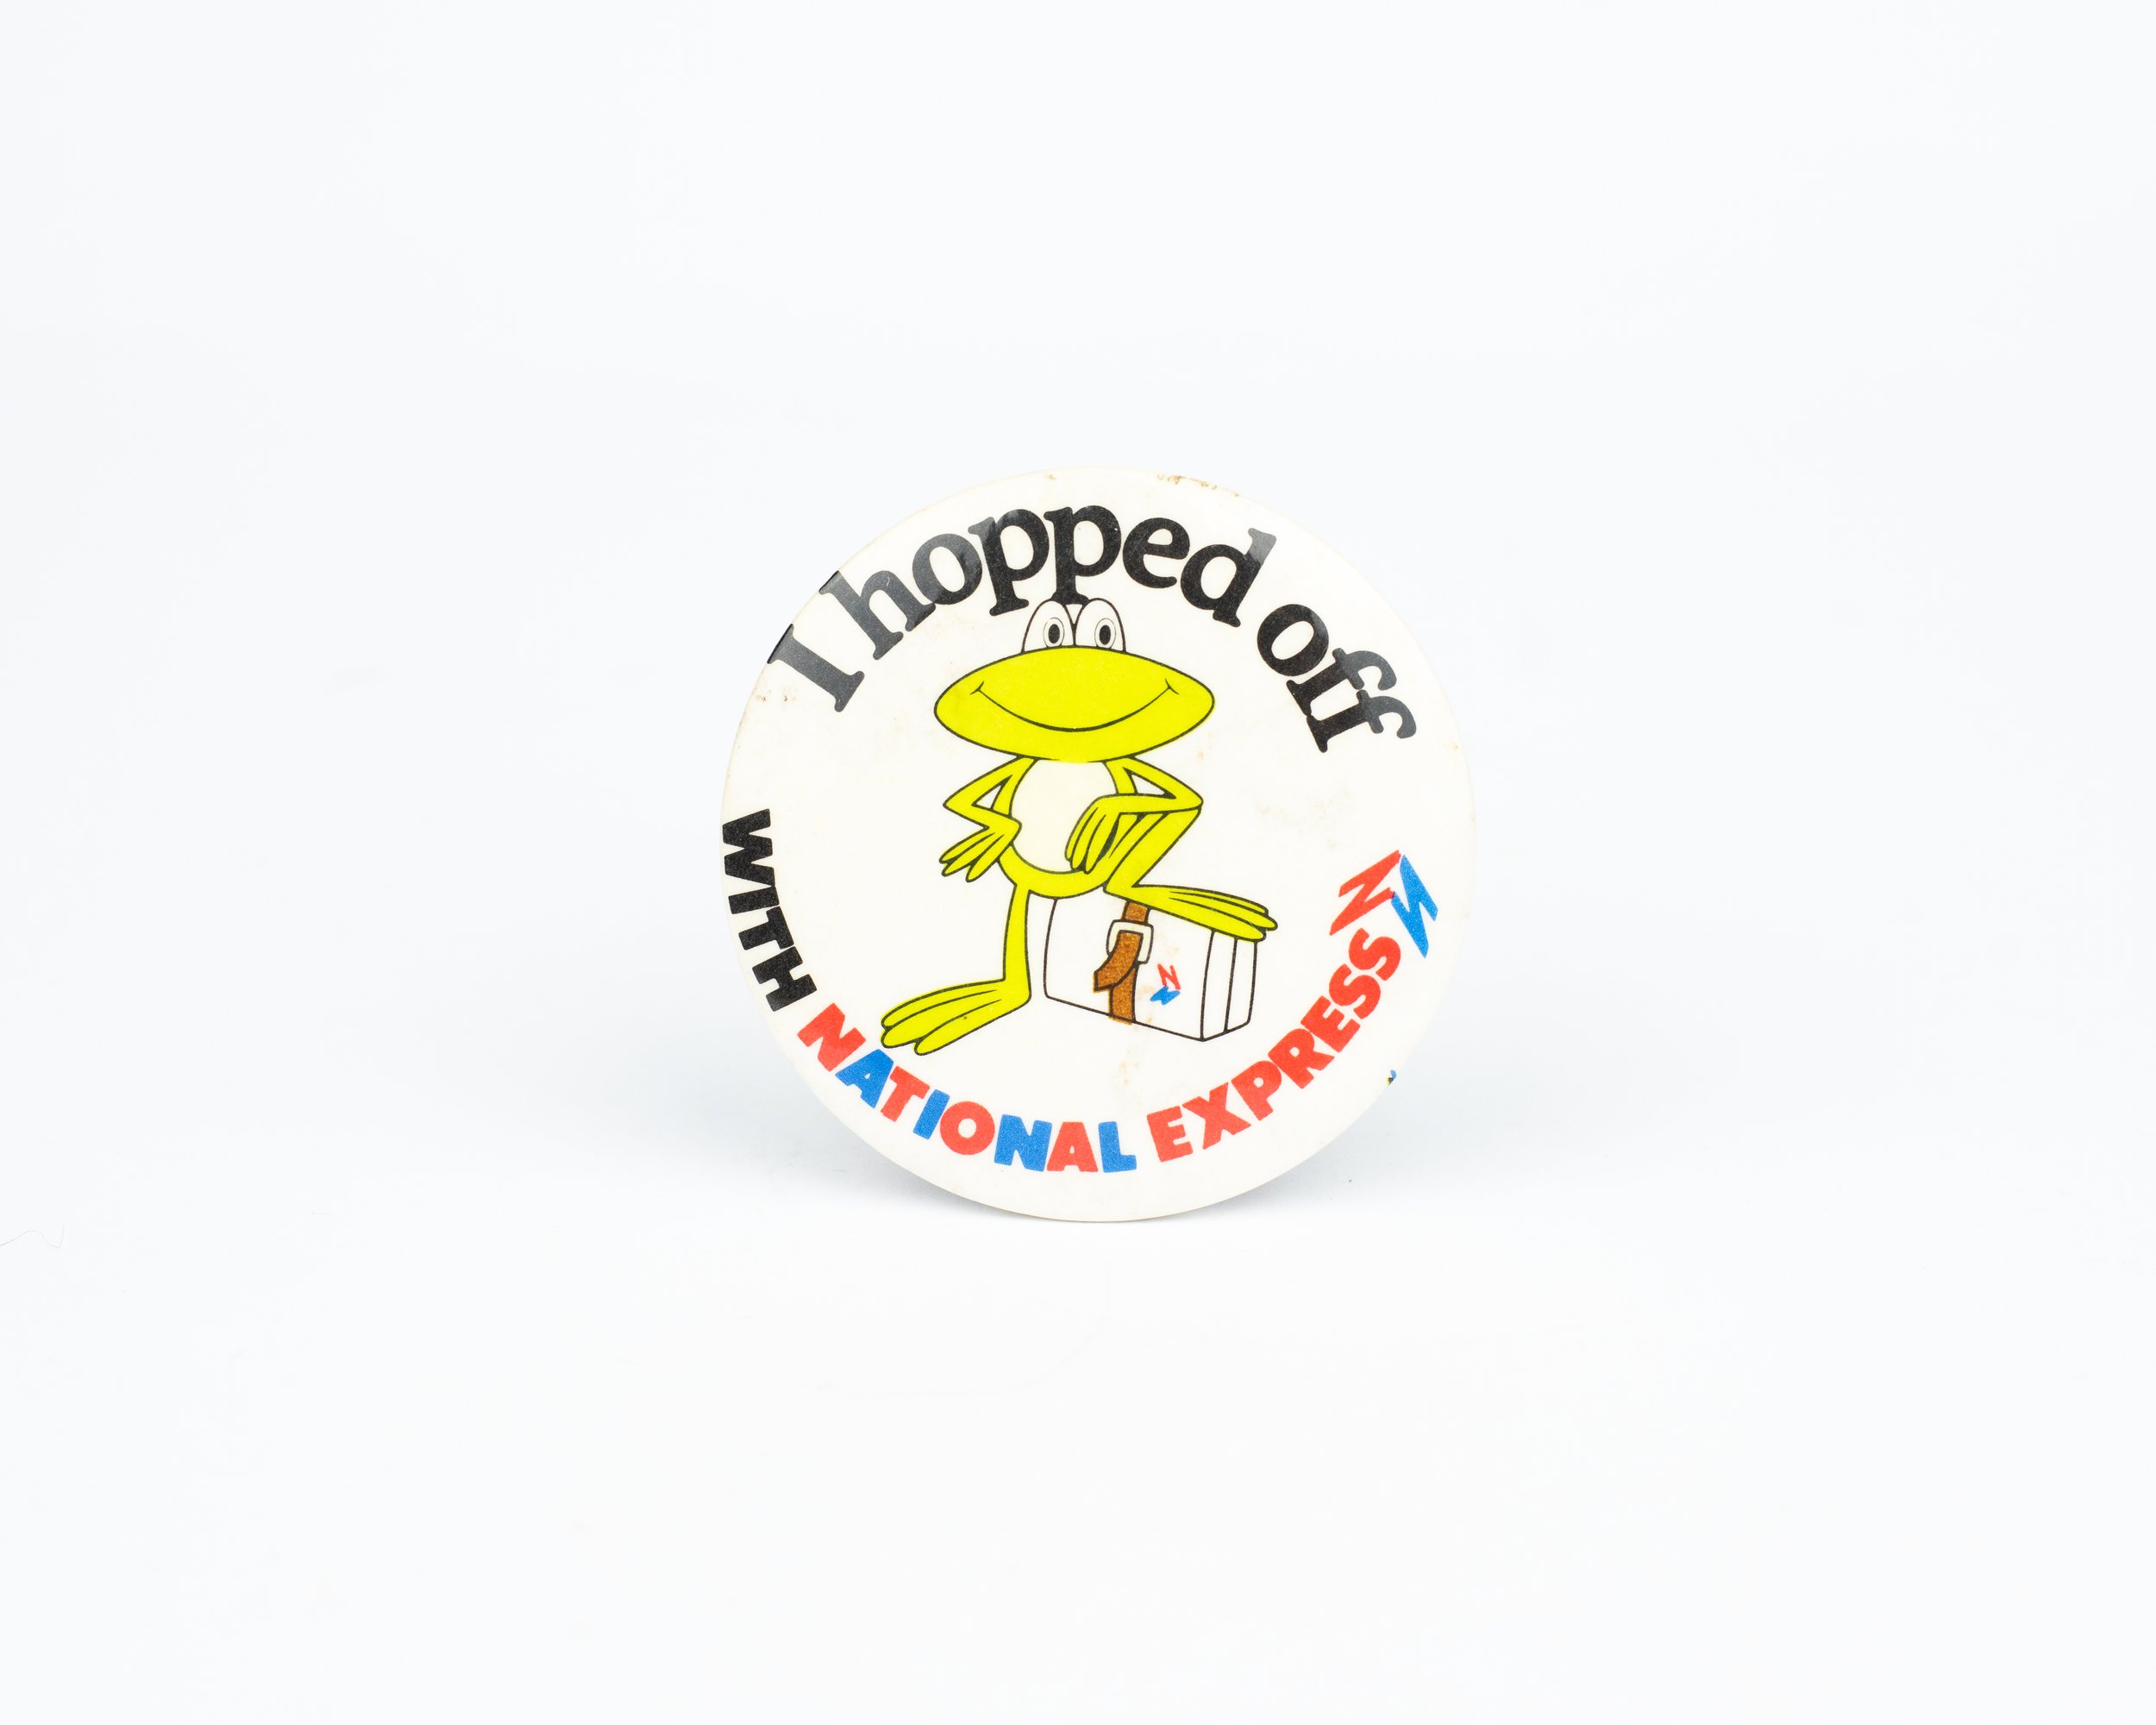  National Express Badge 